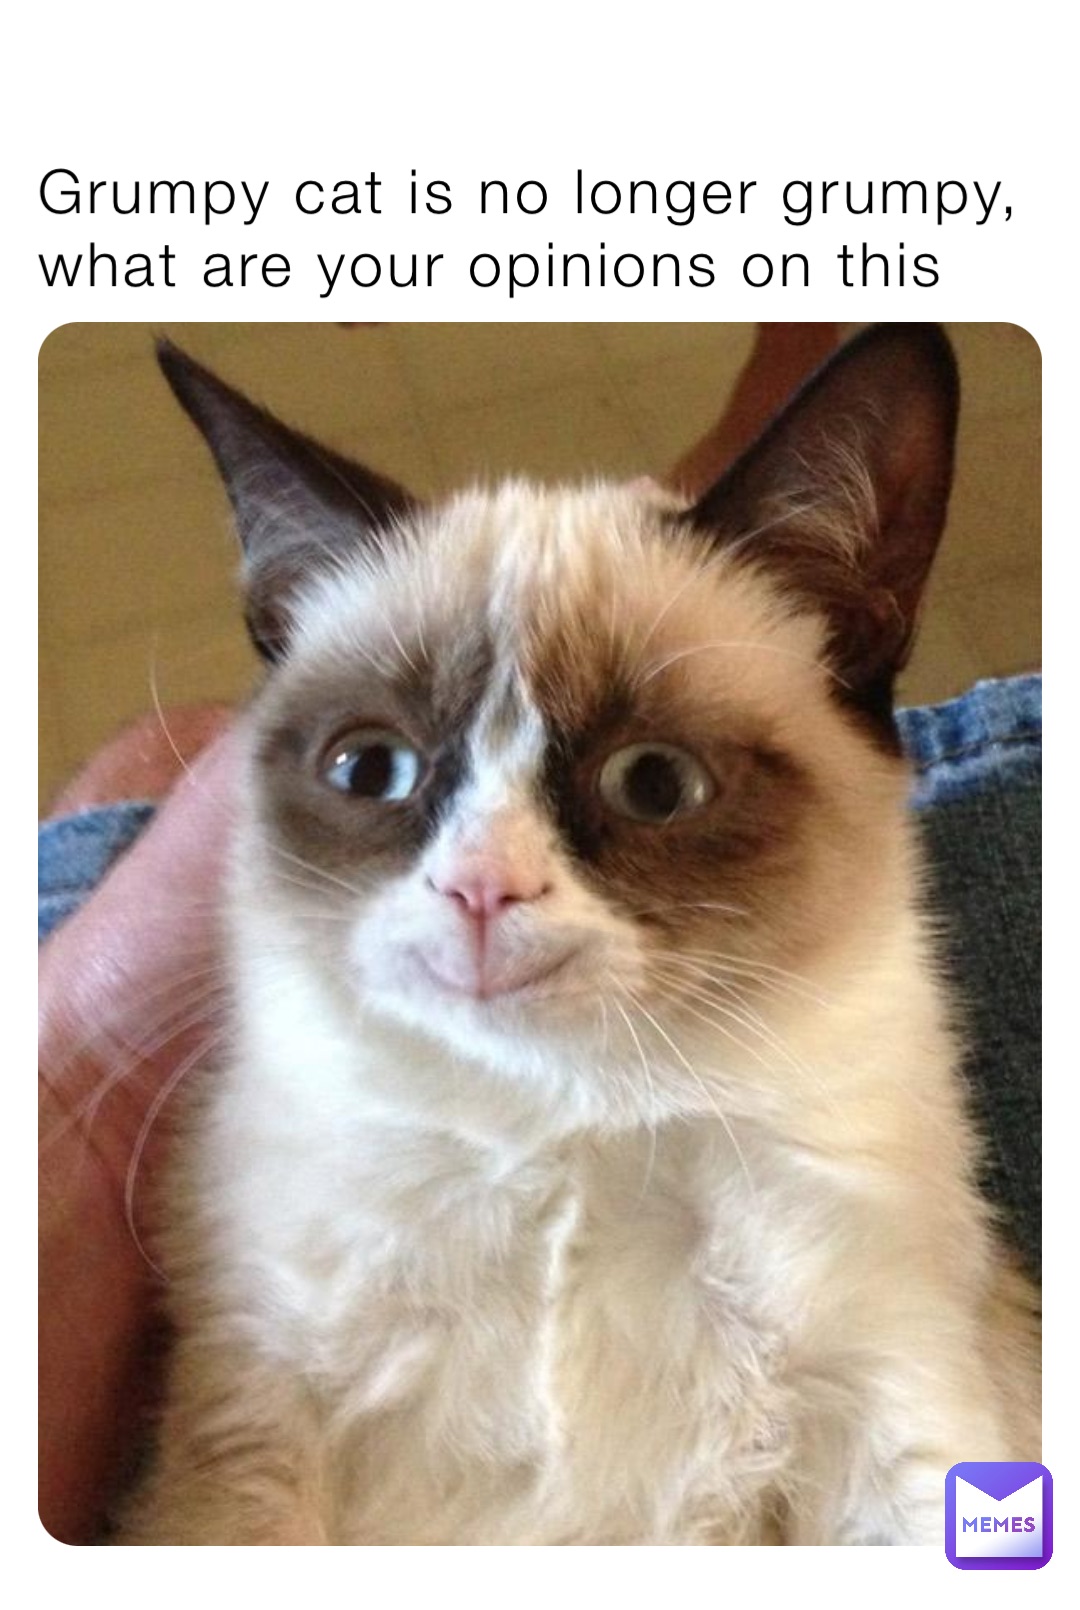 grumpy cat meme no